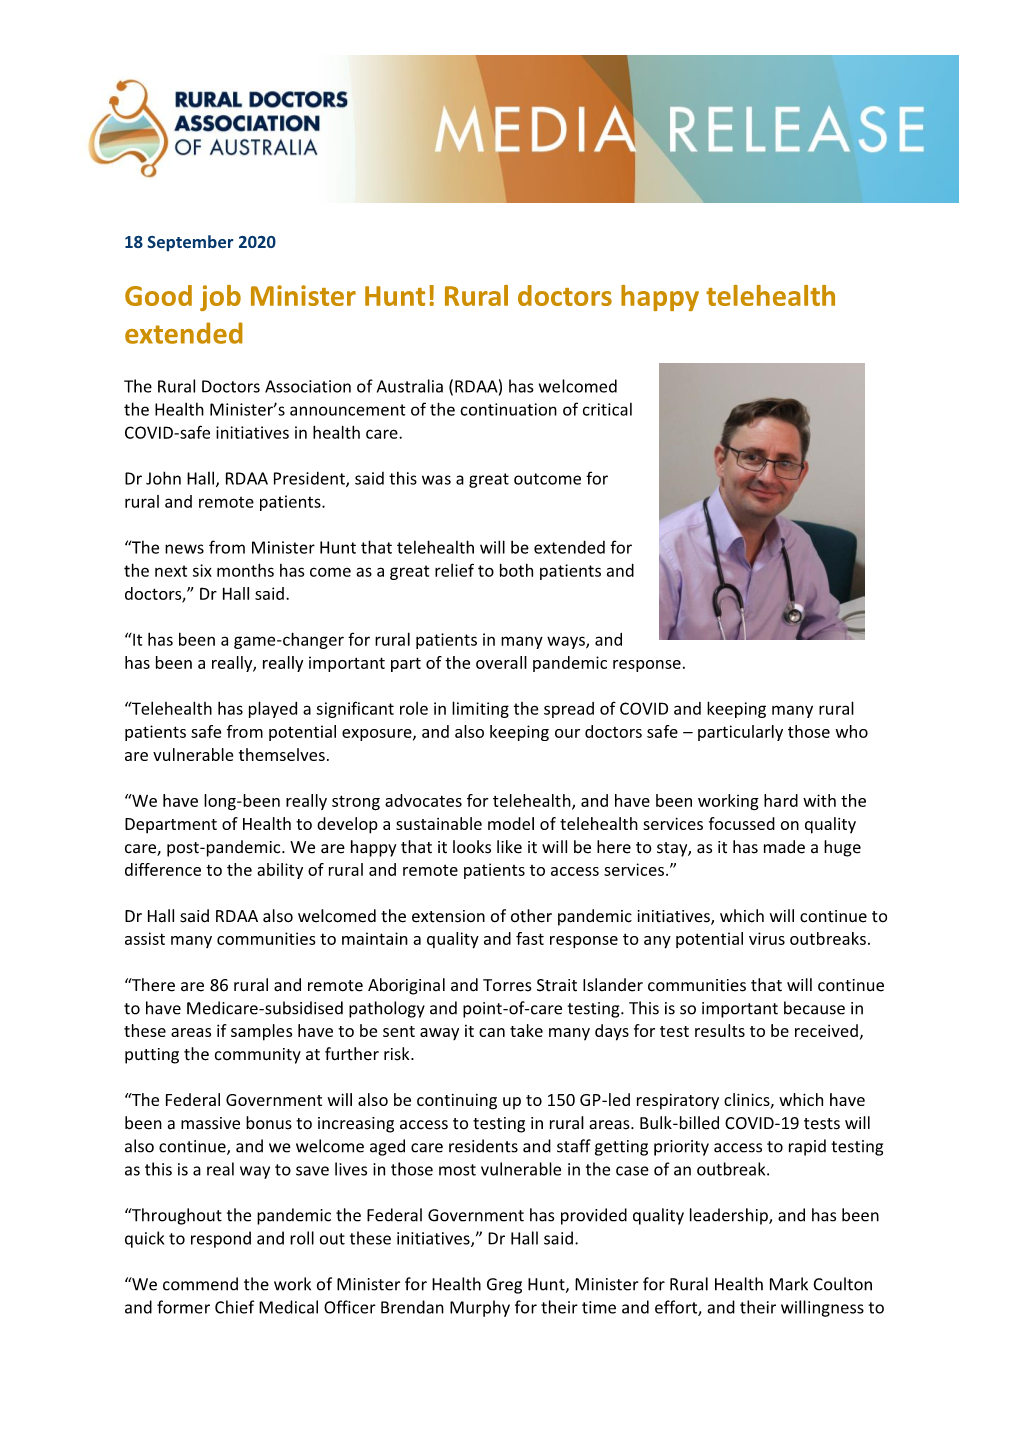 Good Job Minister Hunt! Rural Doctors Happy Telehealth Extended